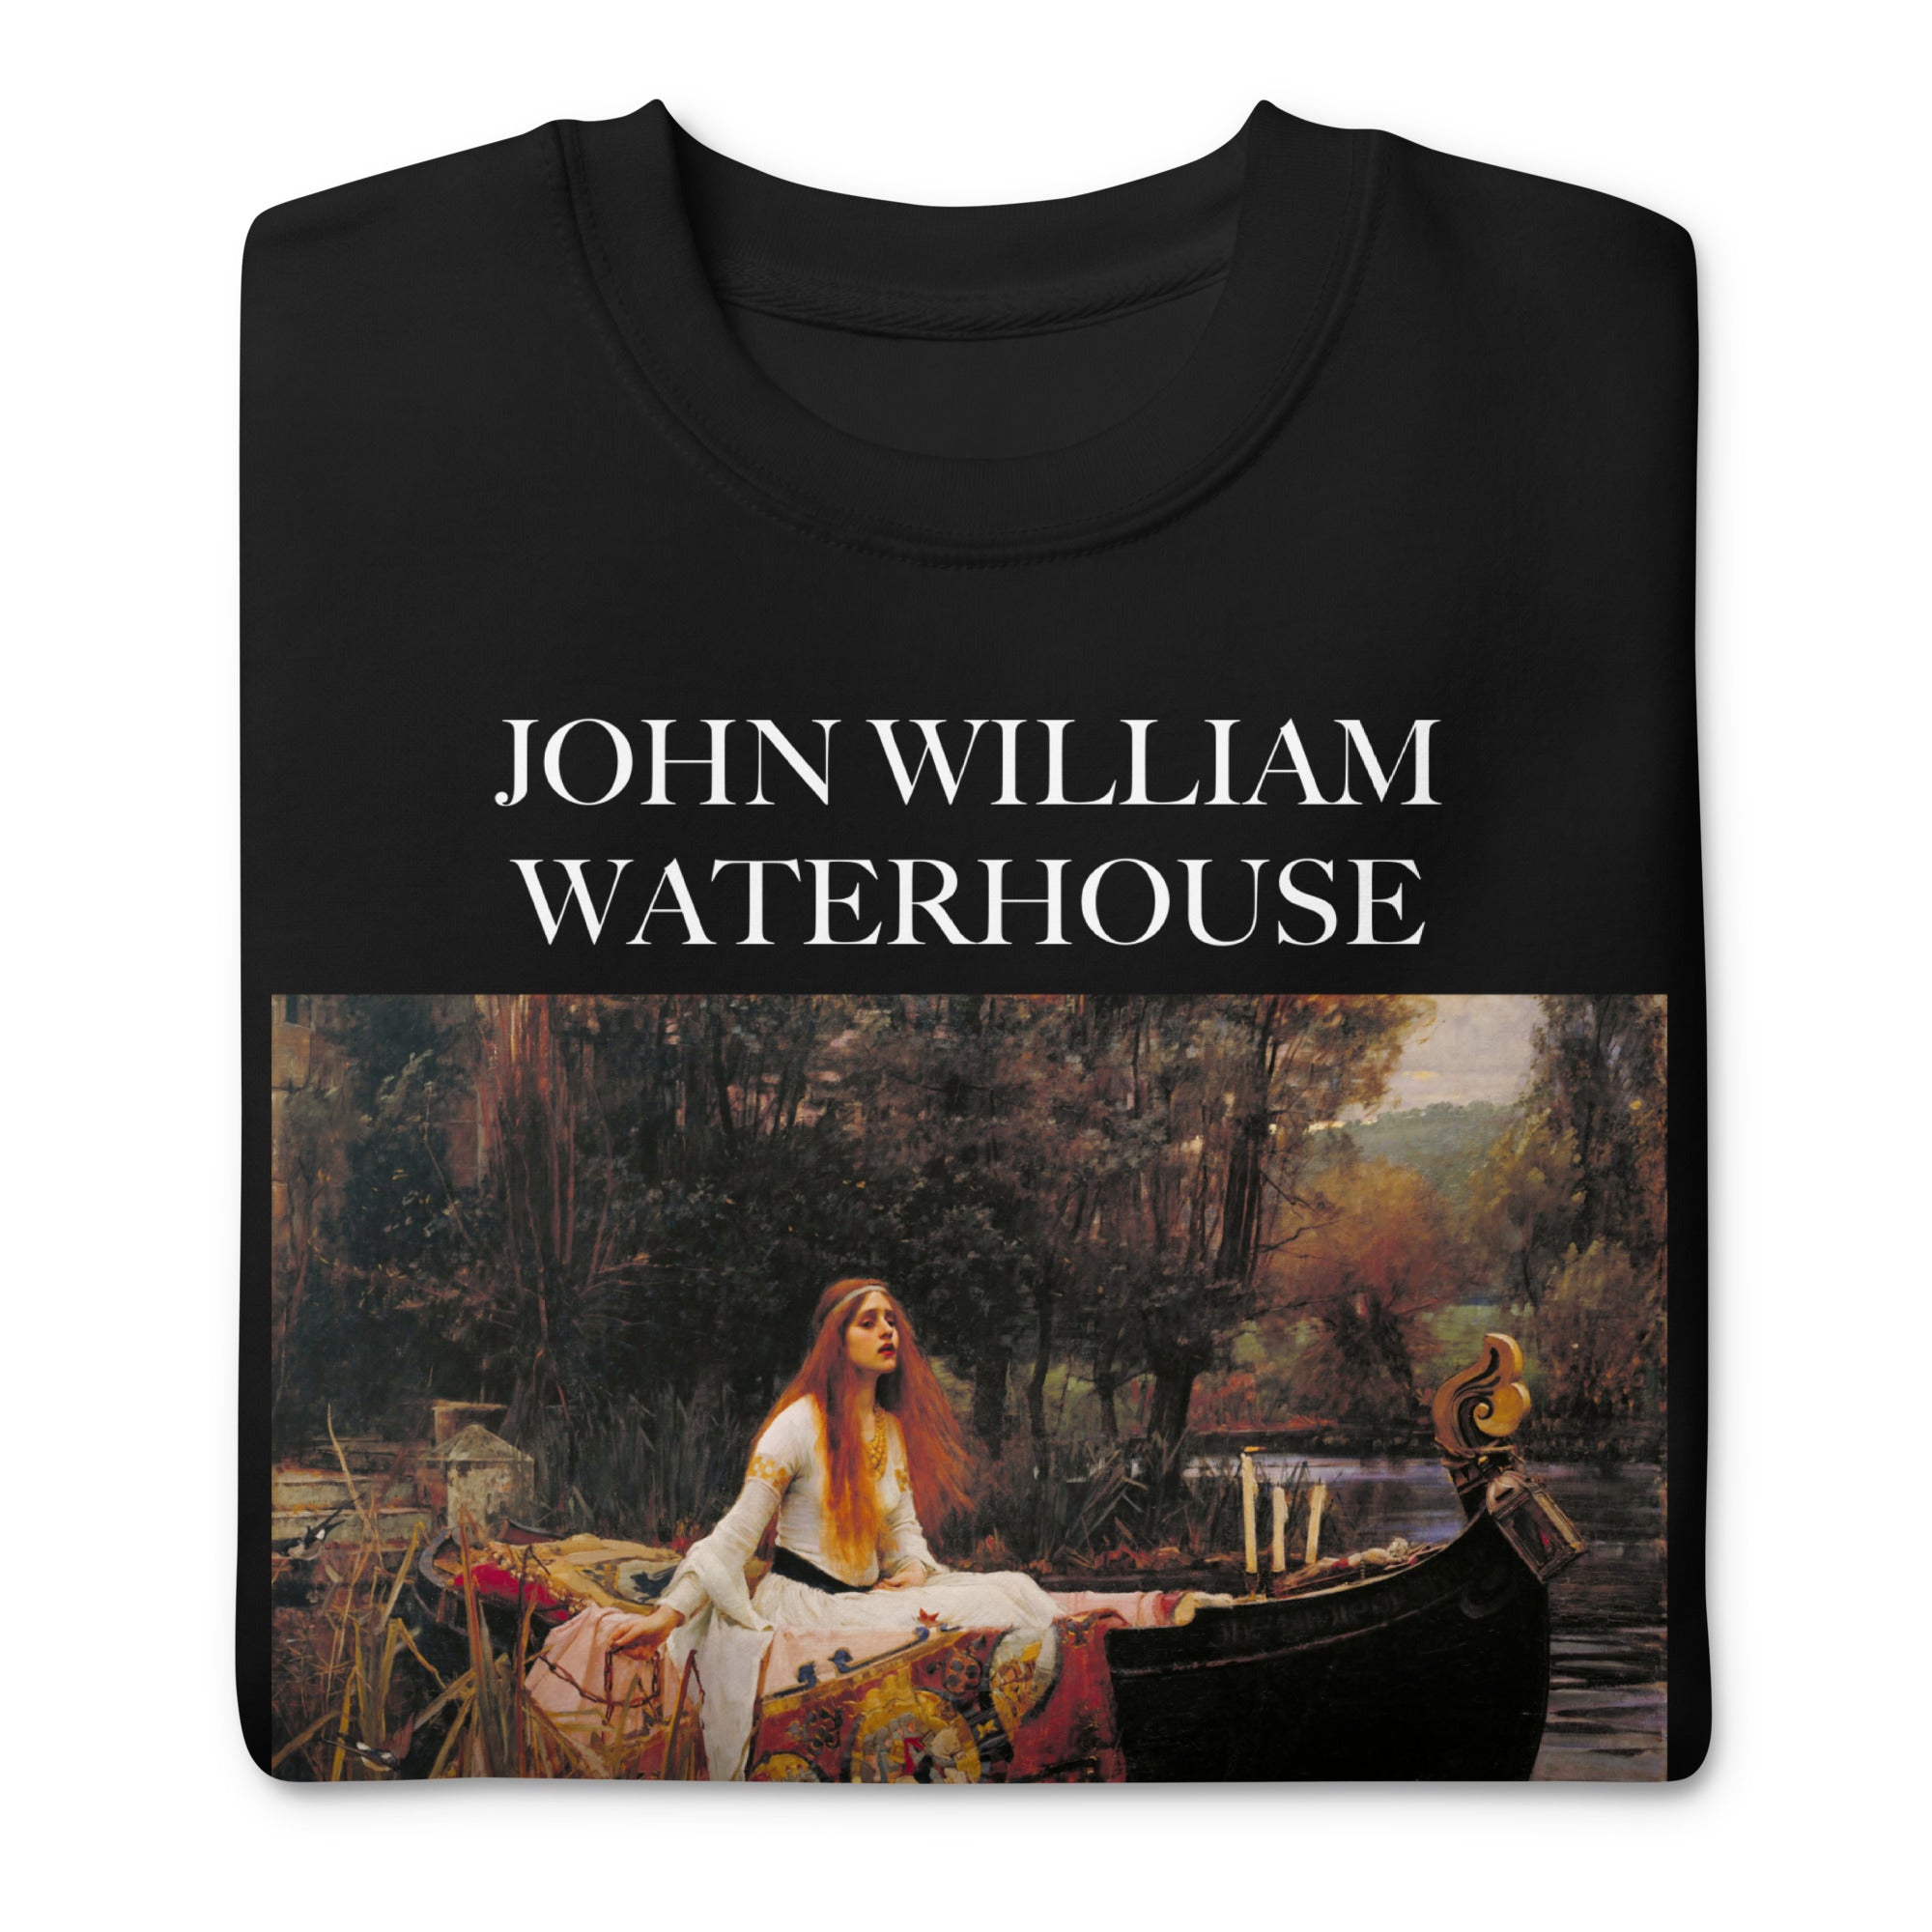 John William Waterhouse 'The Lady of Shalott' Famous Painting Sweatshirt | Unisex Premium Sweatshirt